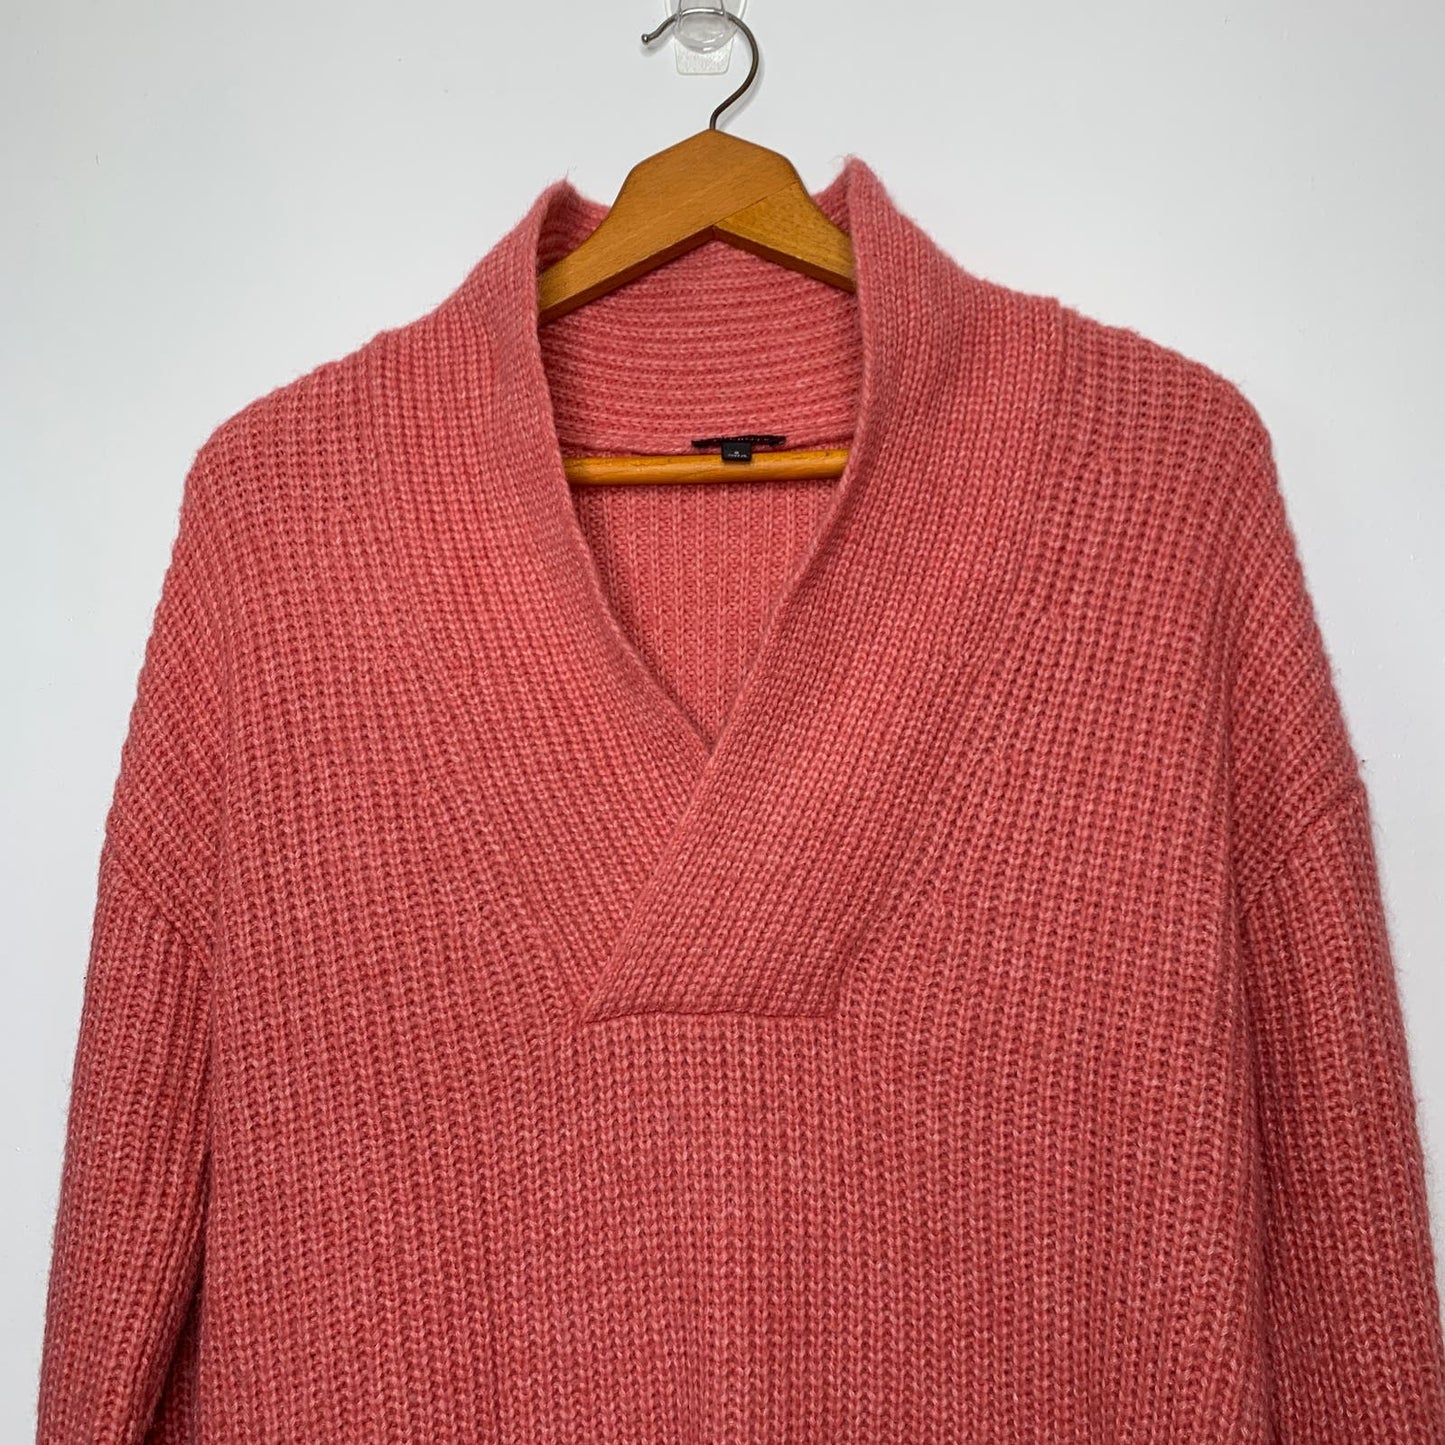 Shawl Collar Shaker Stitch Pullover Sweater SZ S